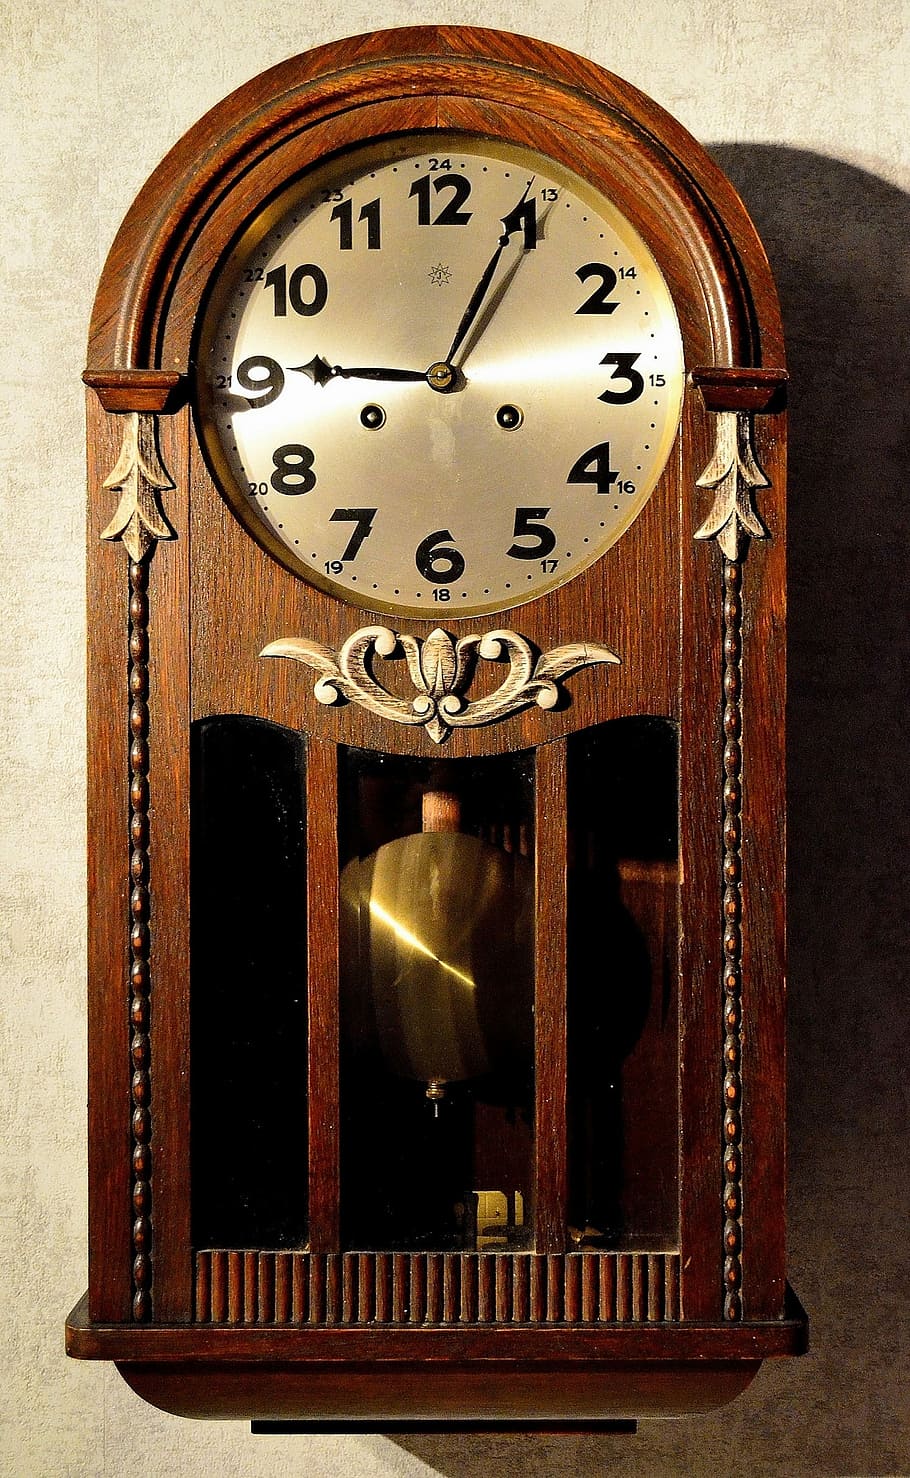 HD wallpaper: Wall Clock, Clock Antique, pendulum clock, clock face,  nostalgic | Wallpaper Flare